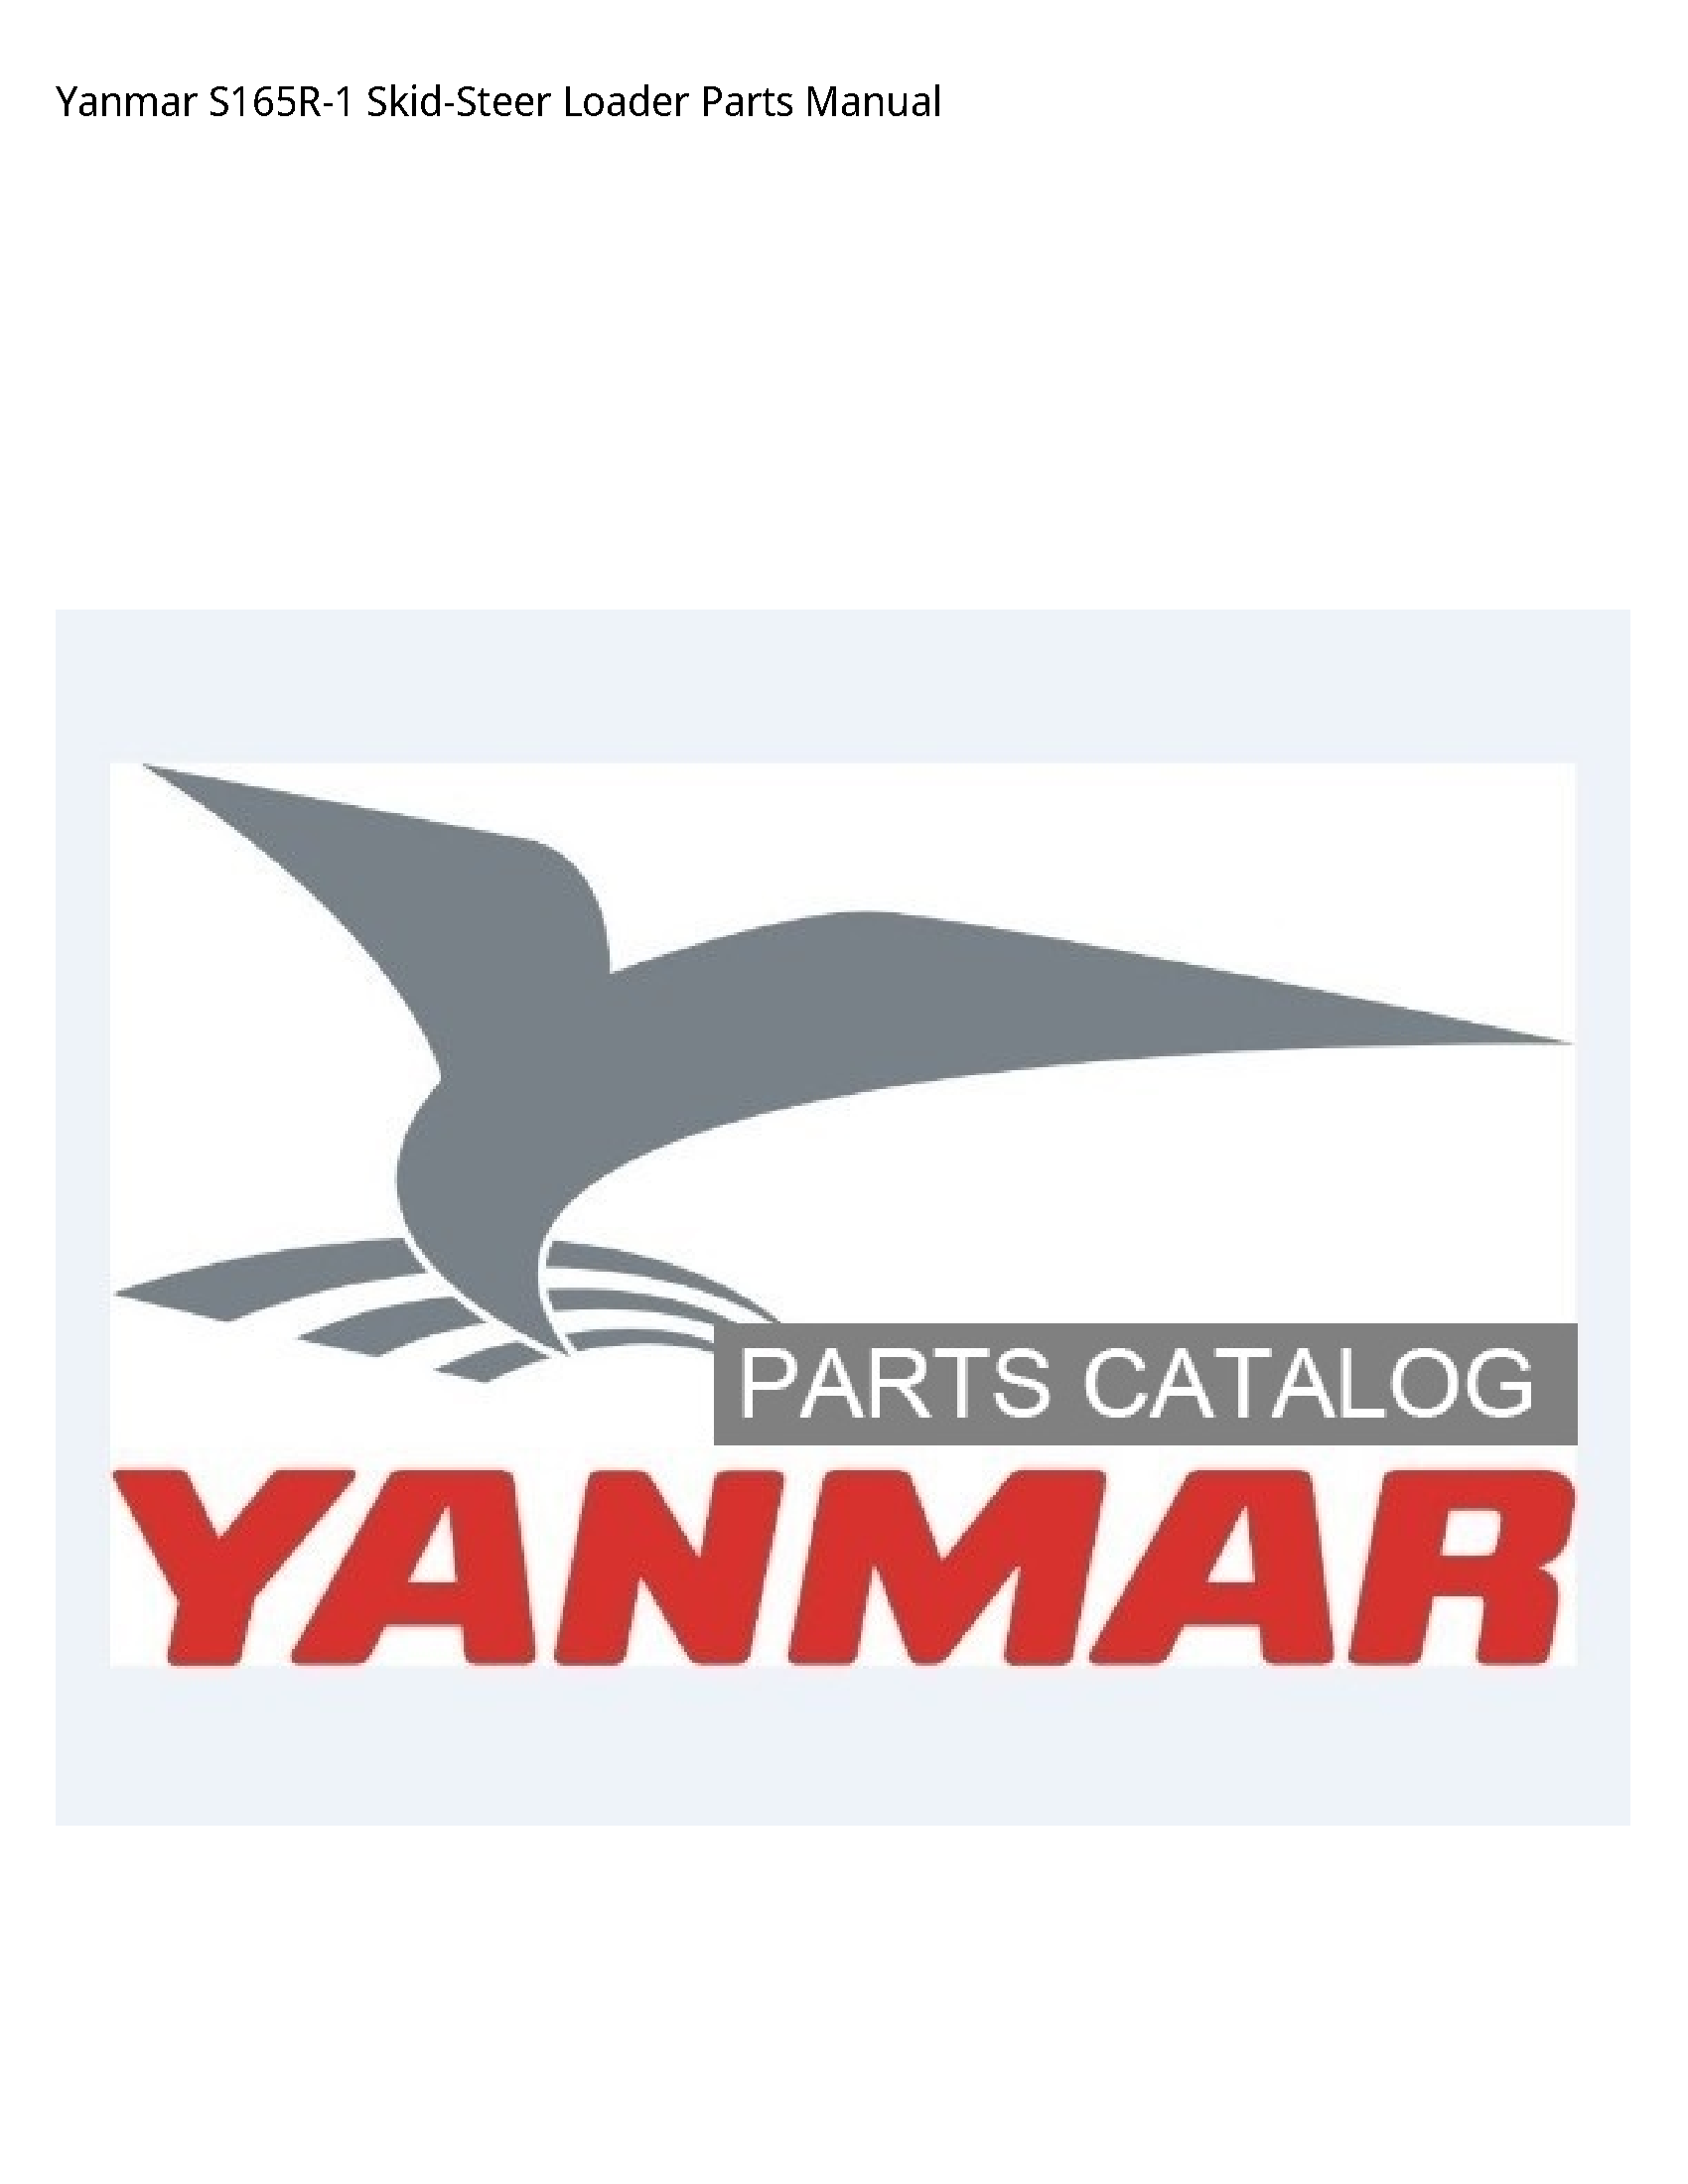 Yanmar S165R-1 Skid-Steer Loader Parts manual